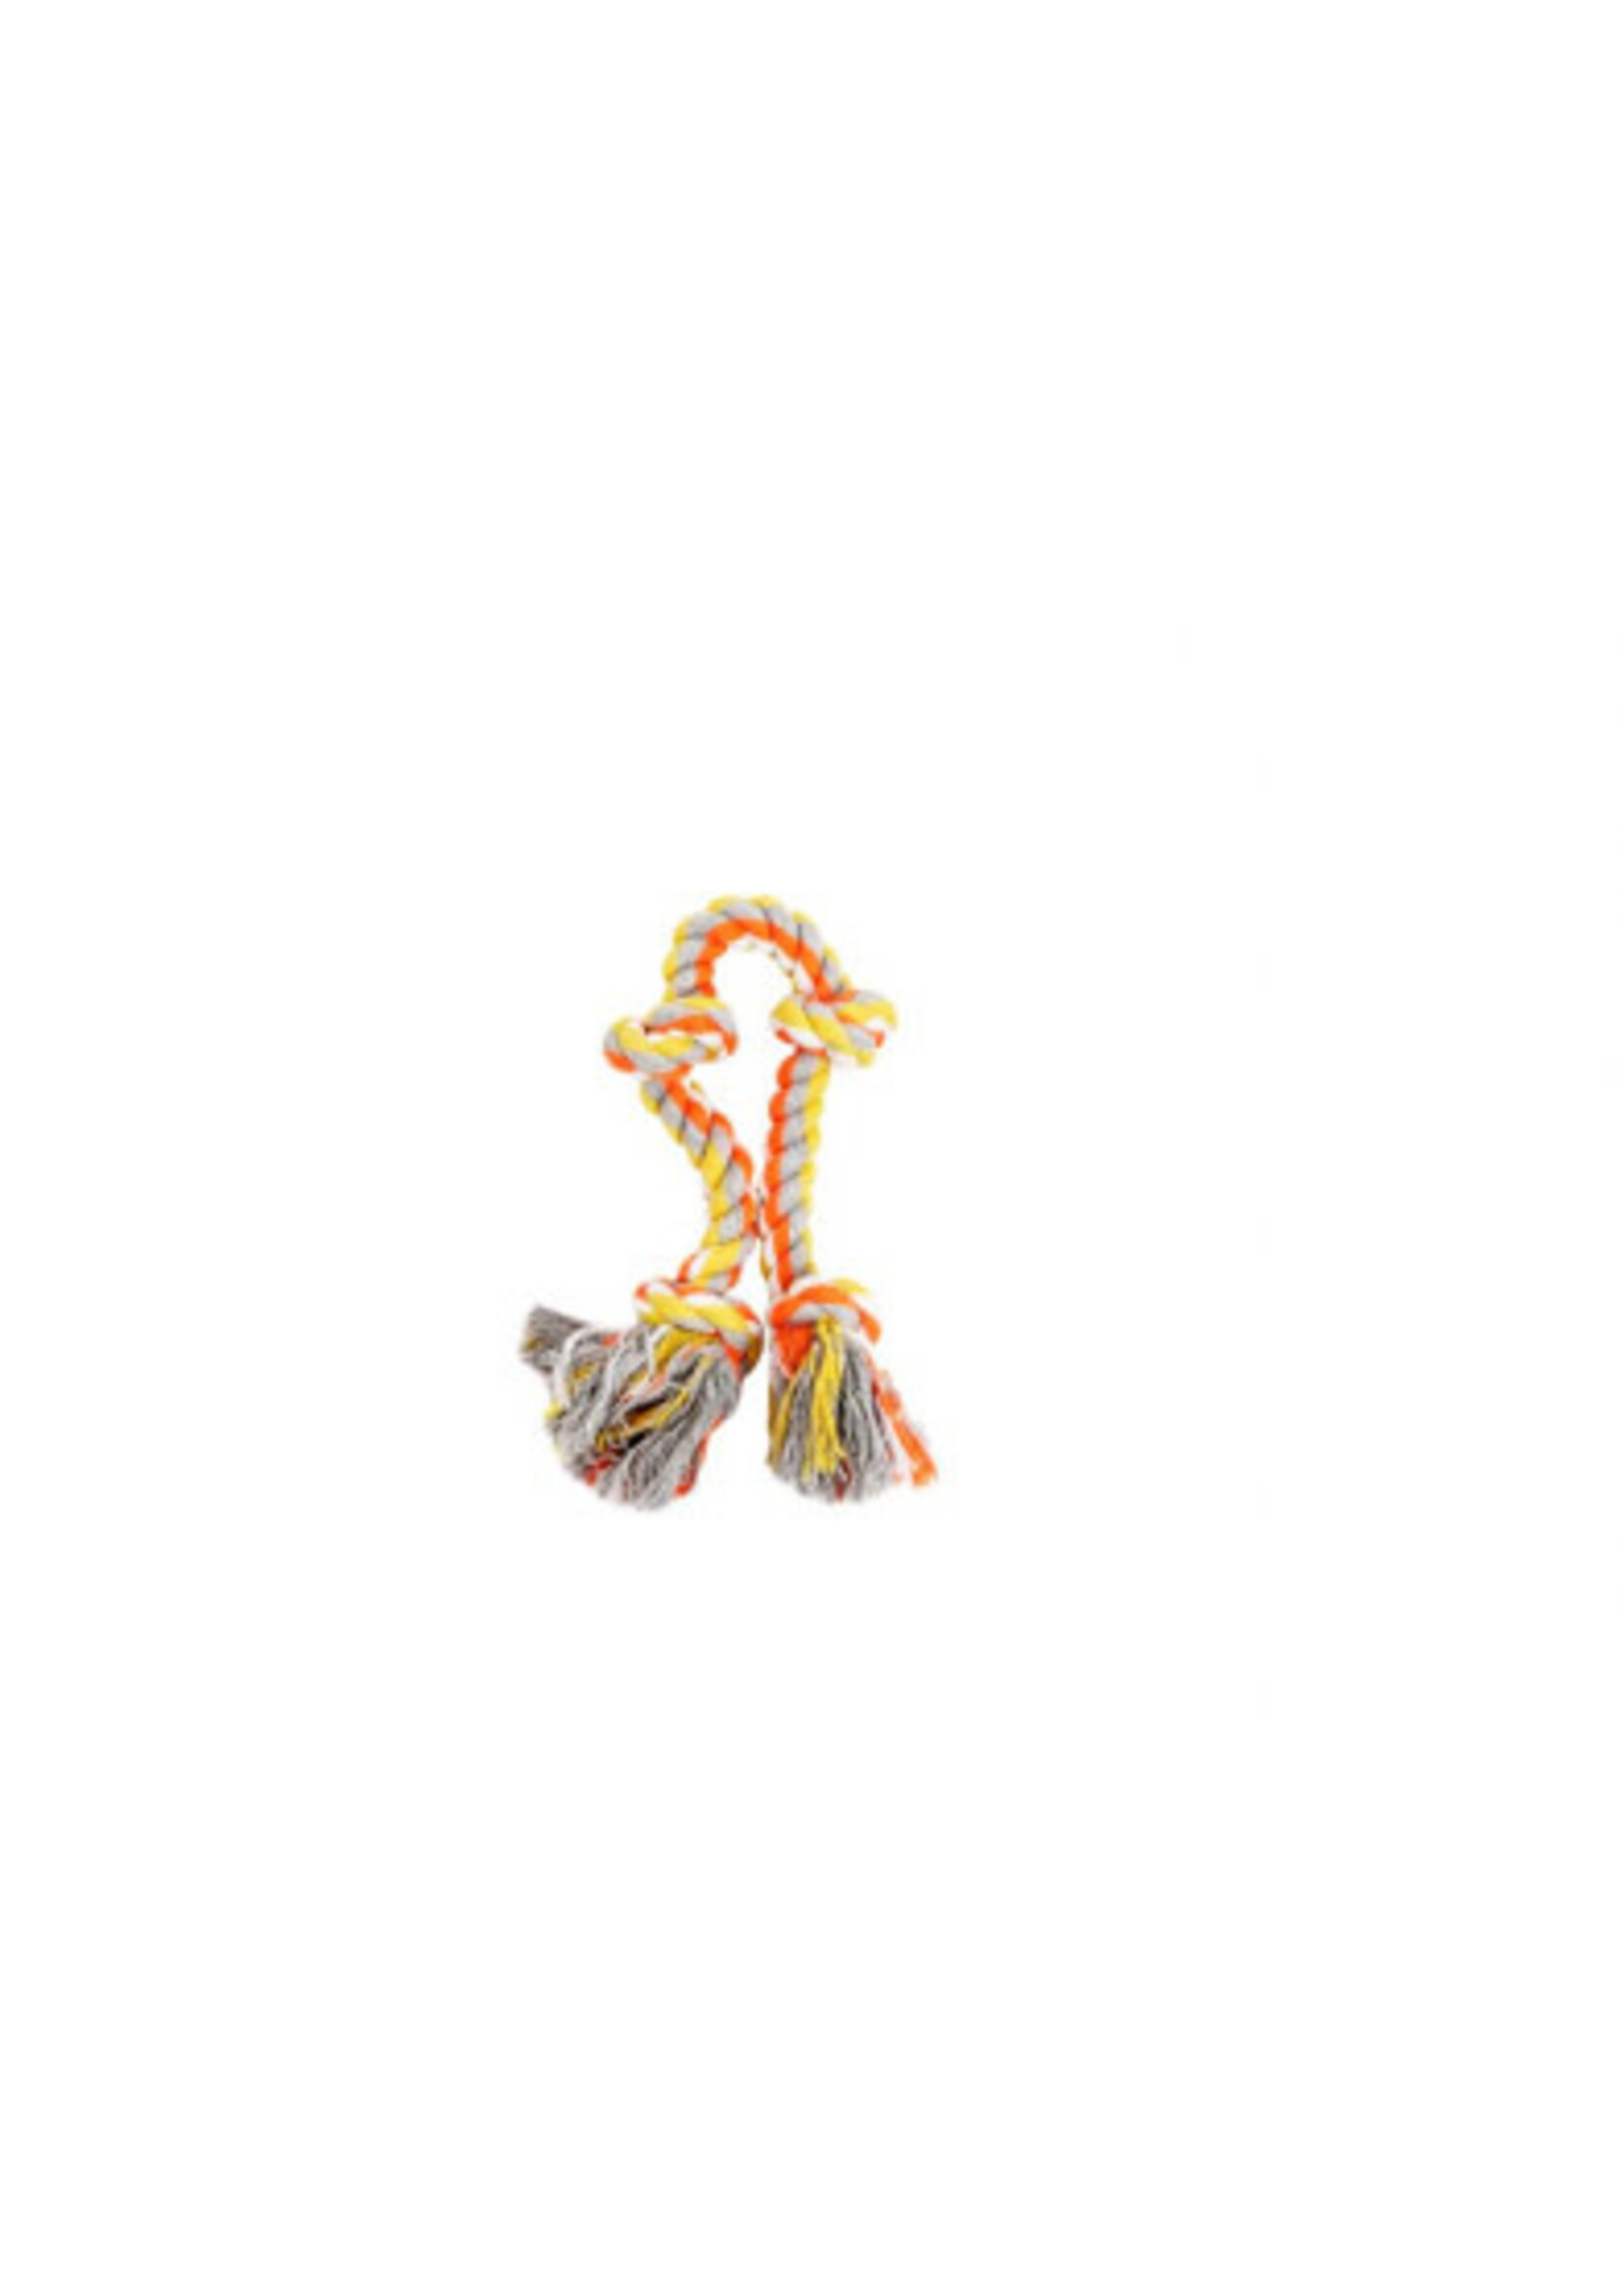 Budz Budz - Rope with 4 Knots Orange and Yellow 15.5"